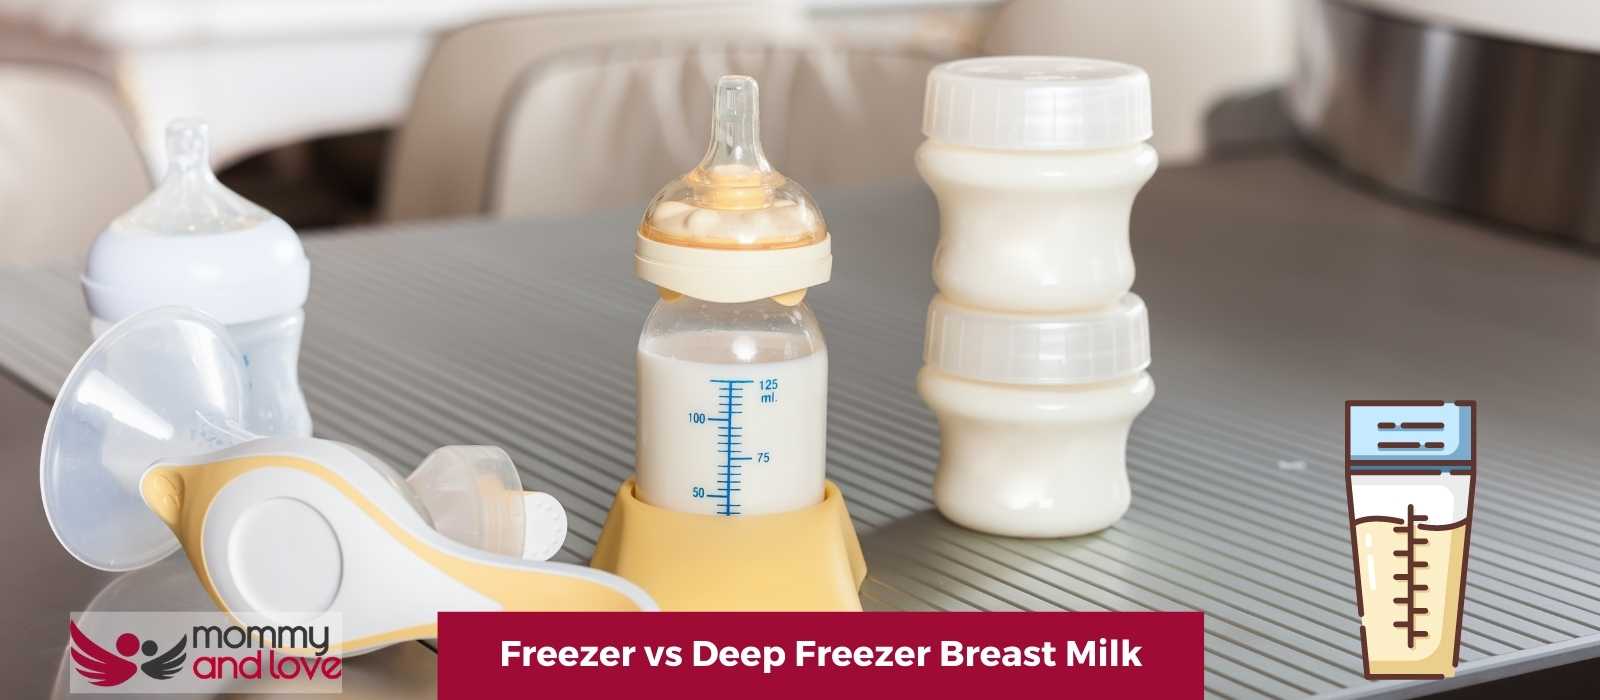 Freezer vs Deep Freezer Breast Milk